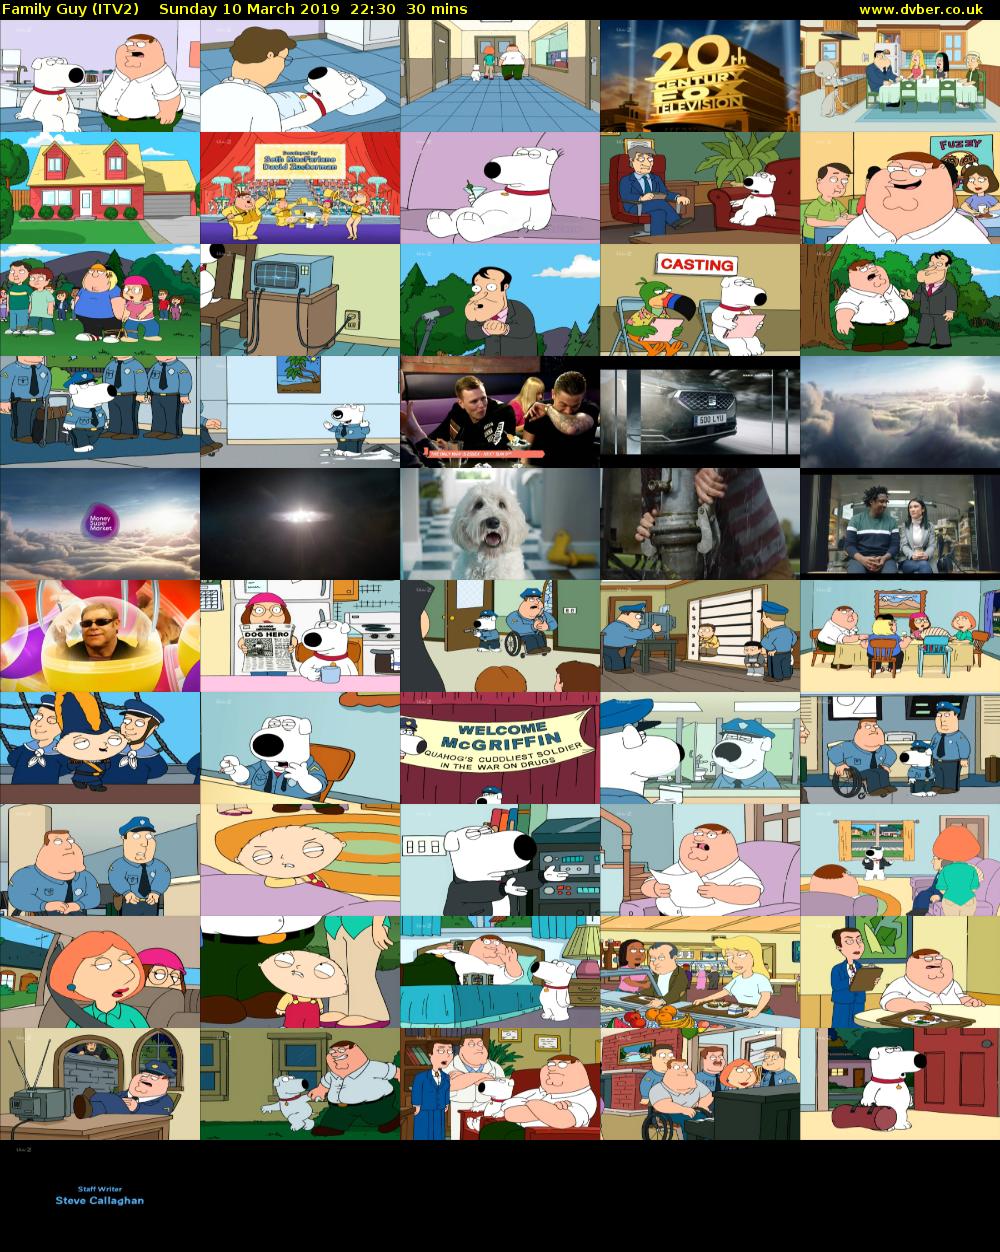 Family Guy (ITV2) Sunday 10 March 2019 22:30 - 23:00